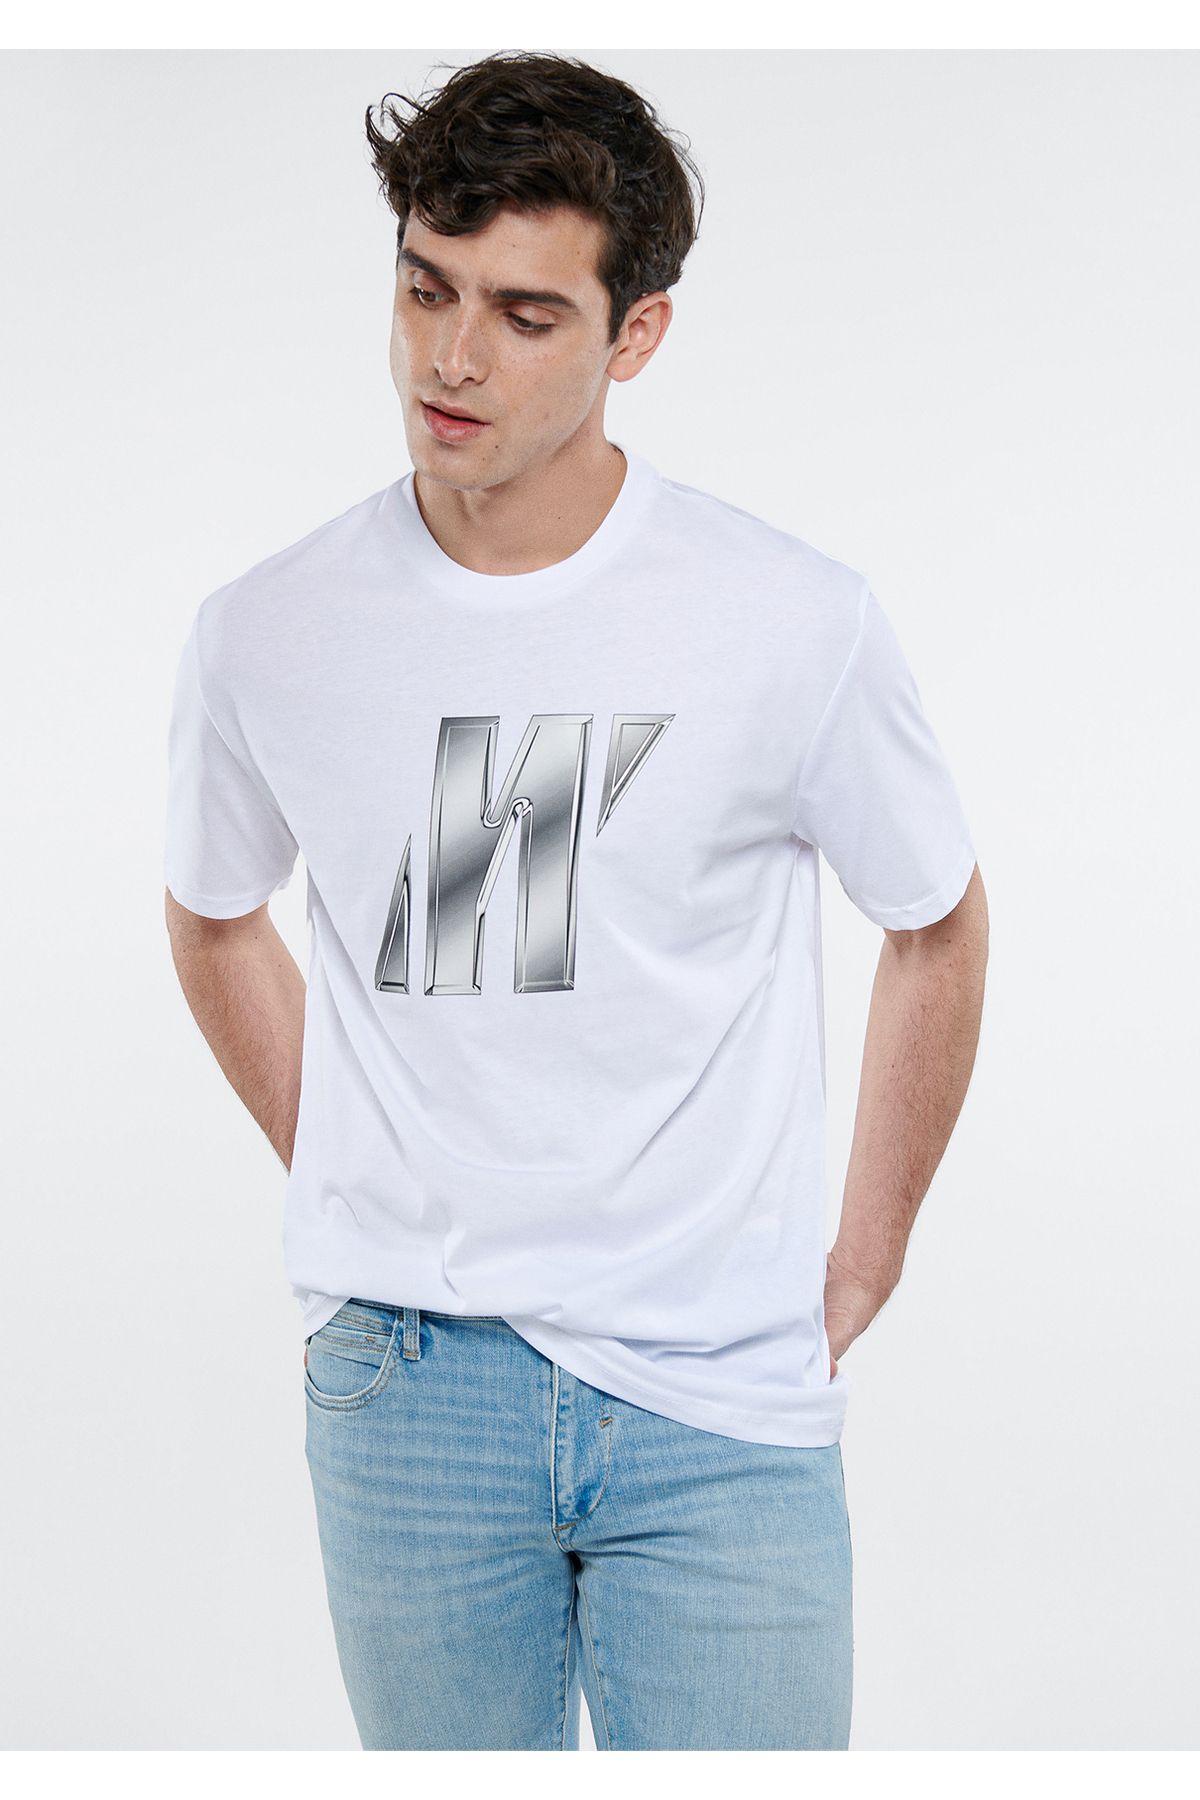 Mavi آرم Pro Logo چاپ شده تی شرت سفید تناسب